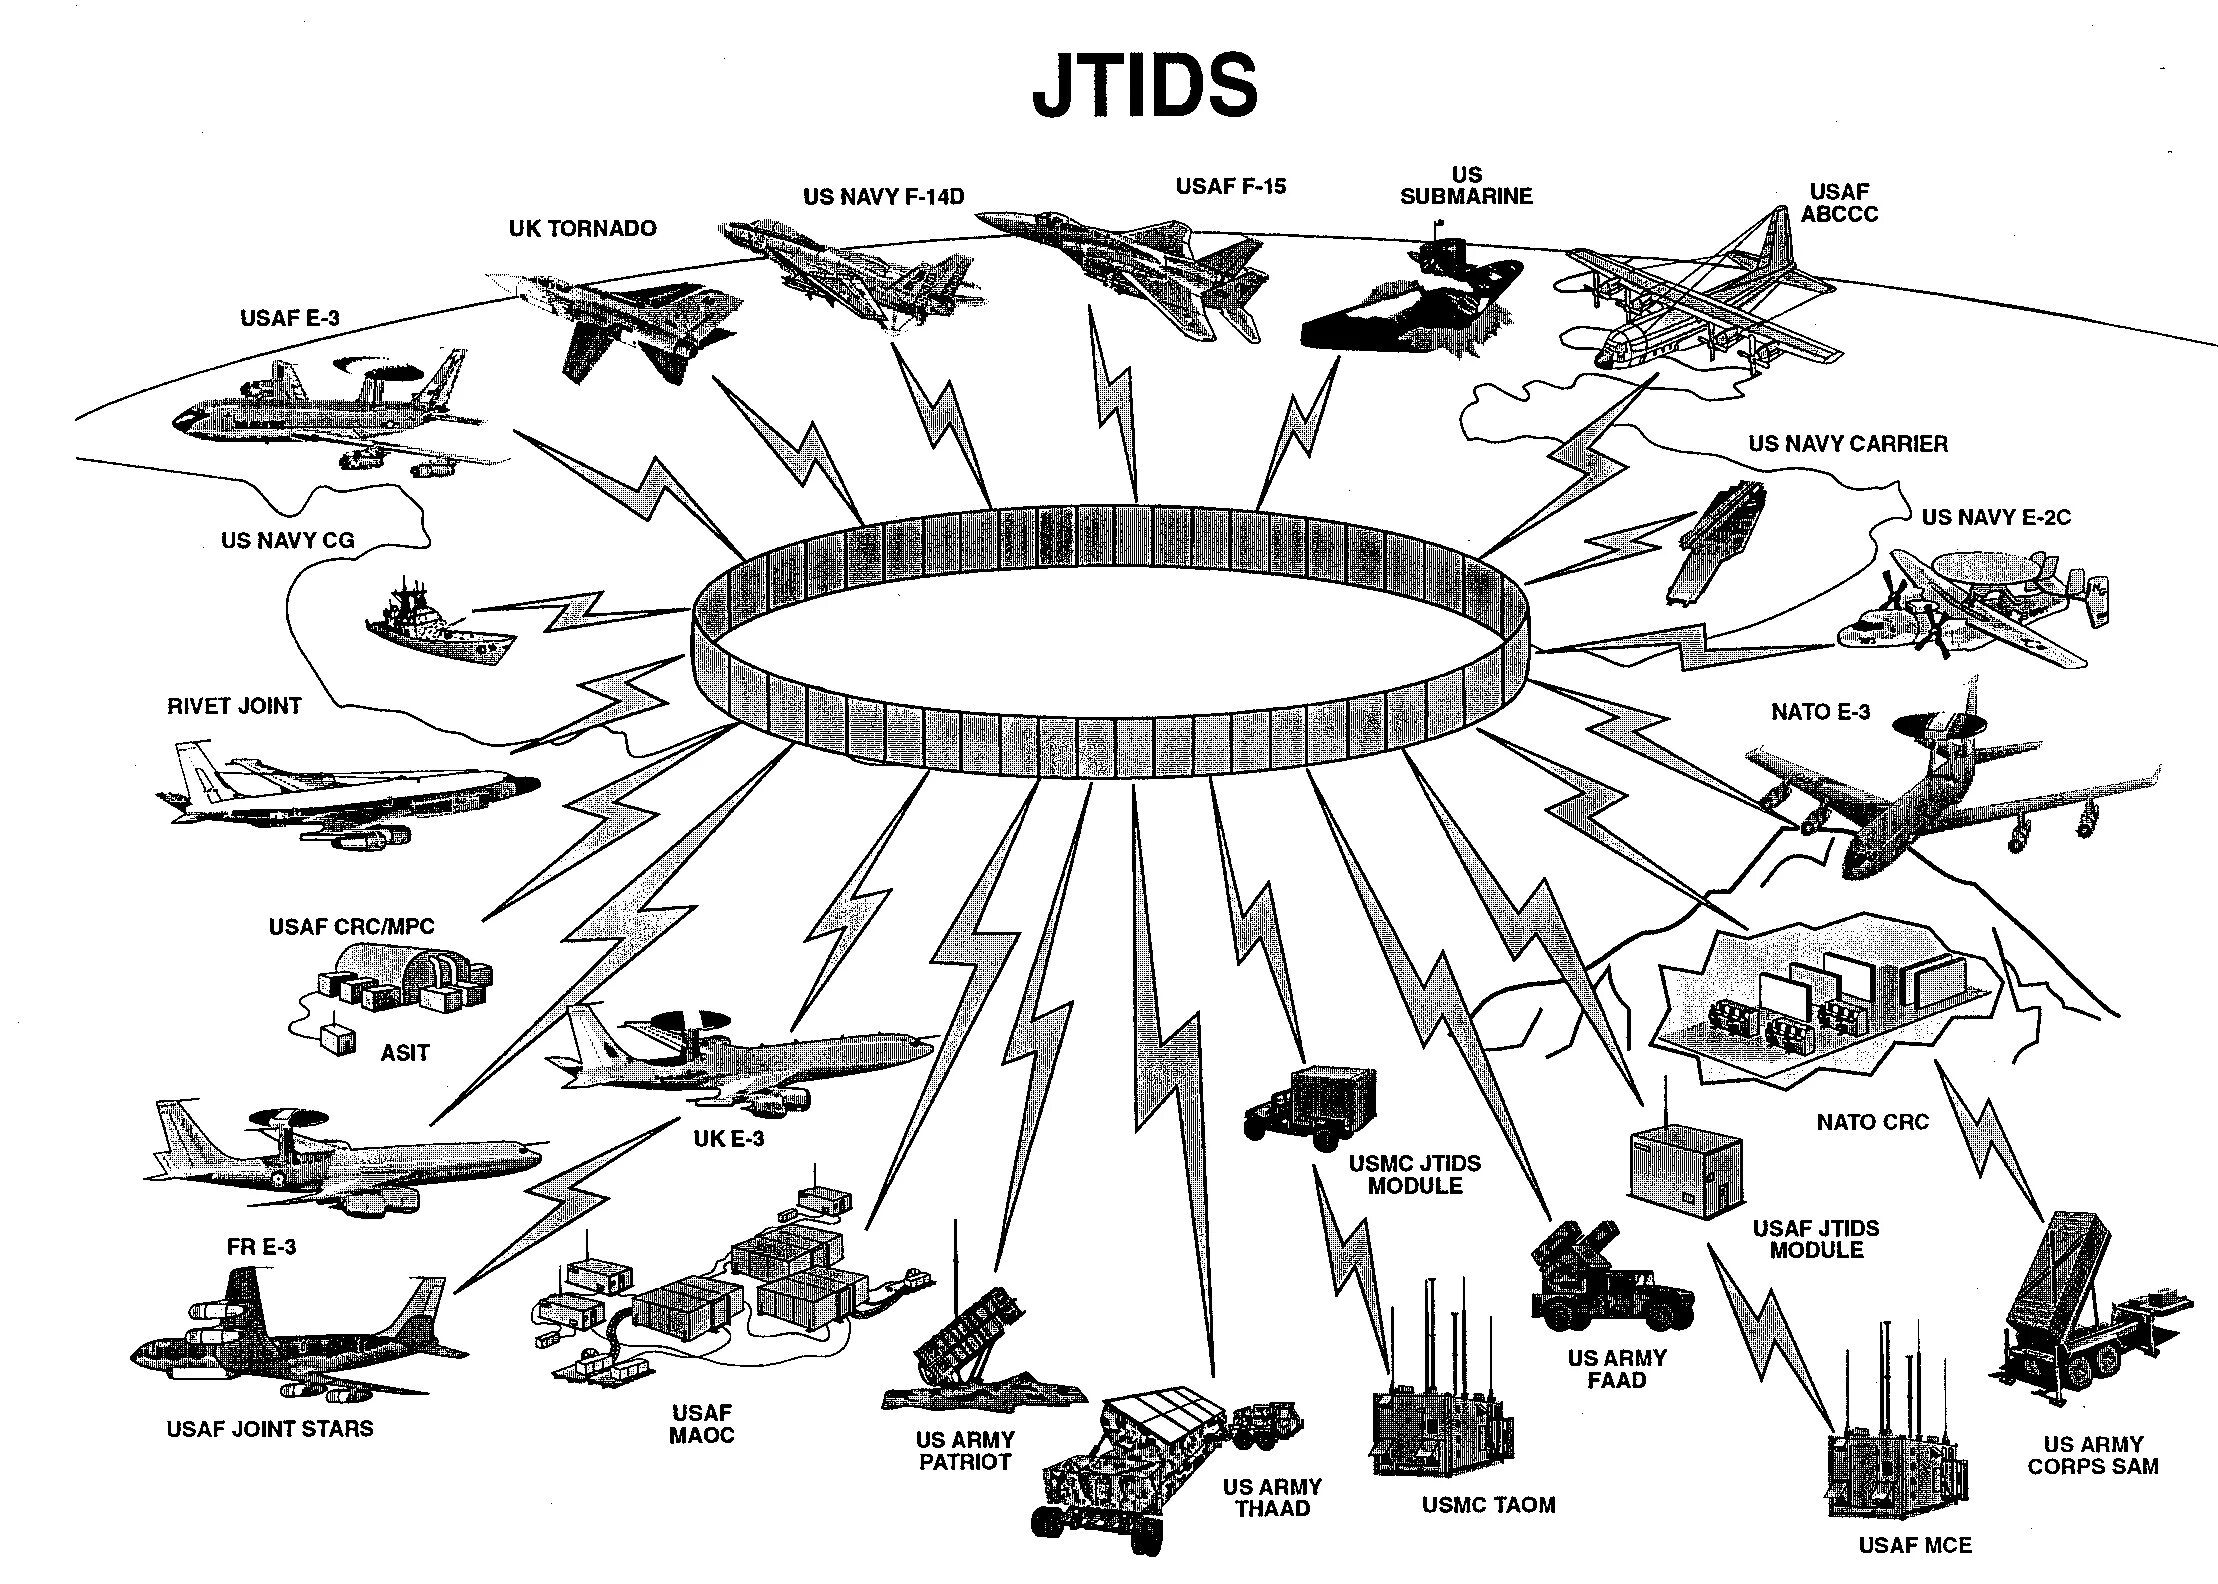 Systems википедия. Система jtids. Link-16 jtids. Системы тактической связи. Системы связи НАТО.